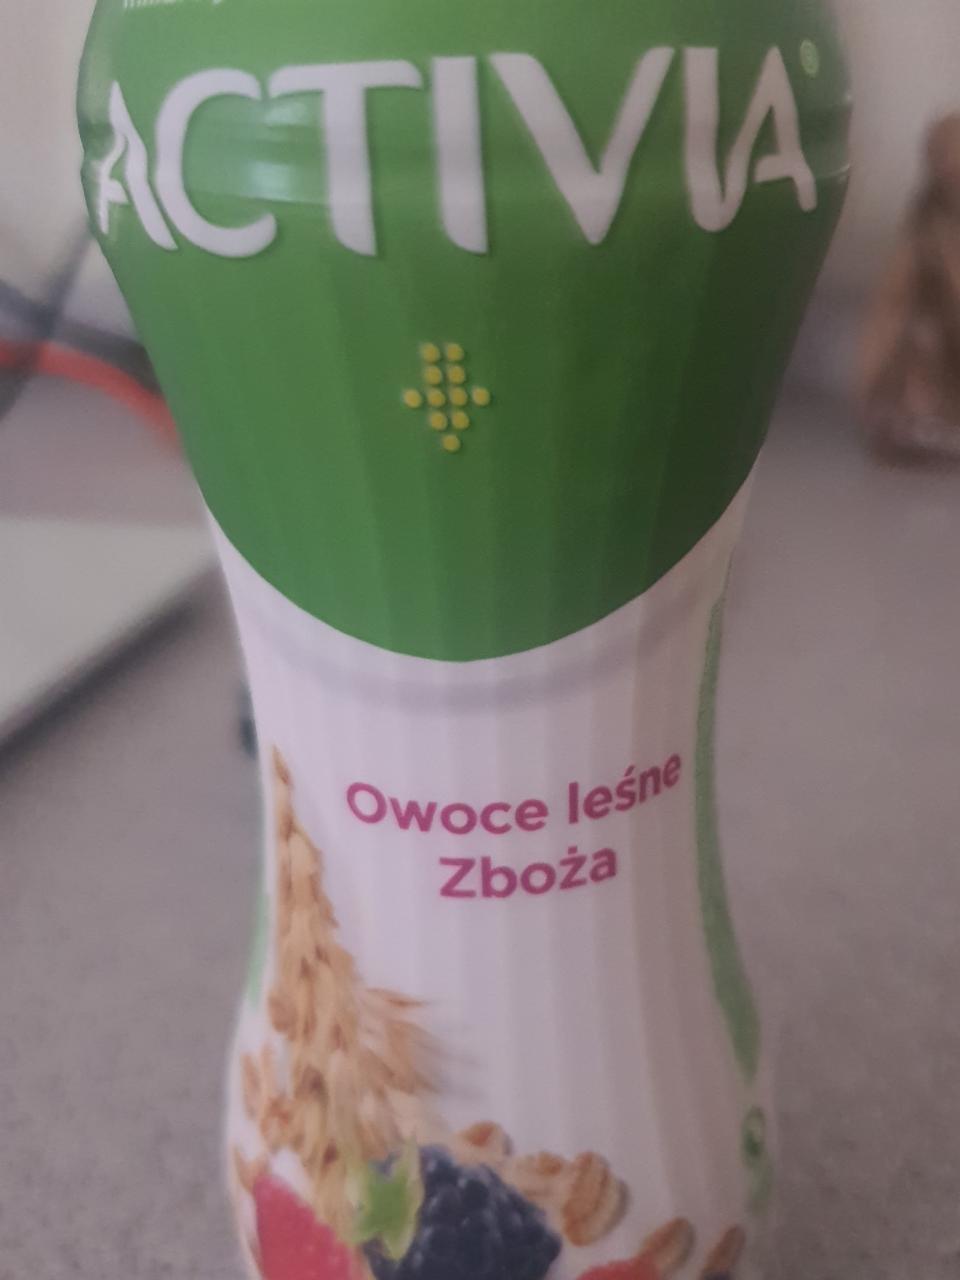 Fotografie - Activia drink Owoce lesne zboza